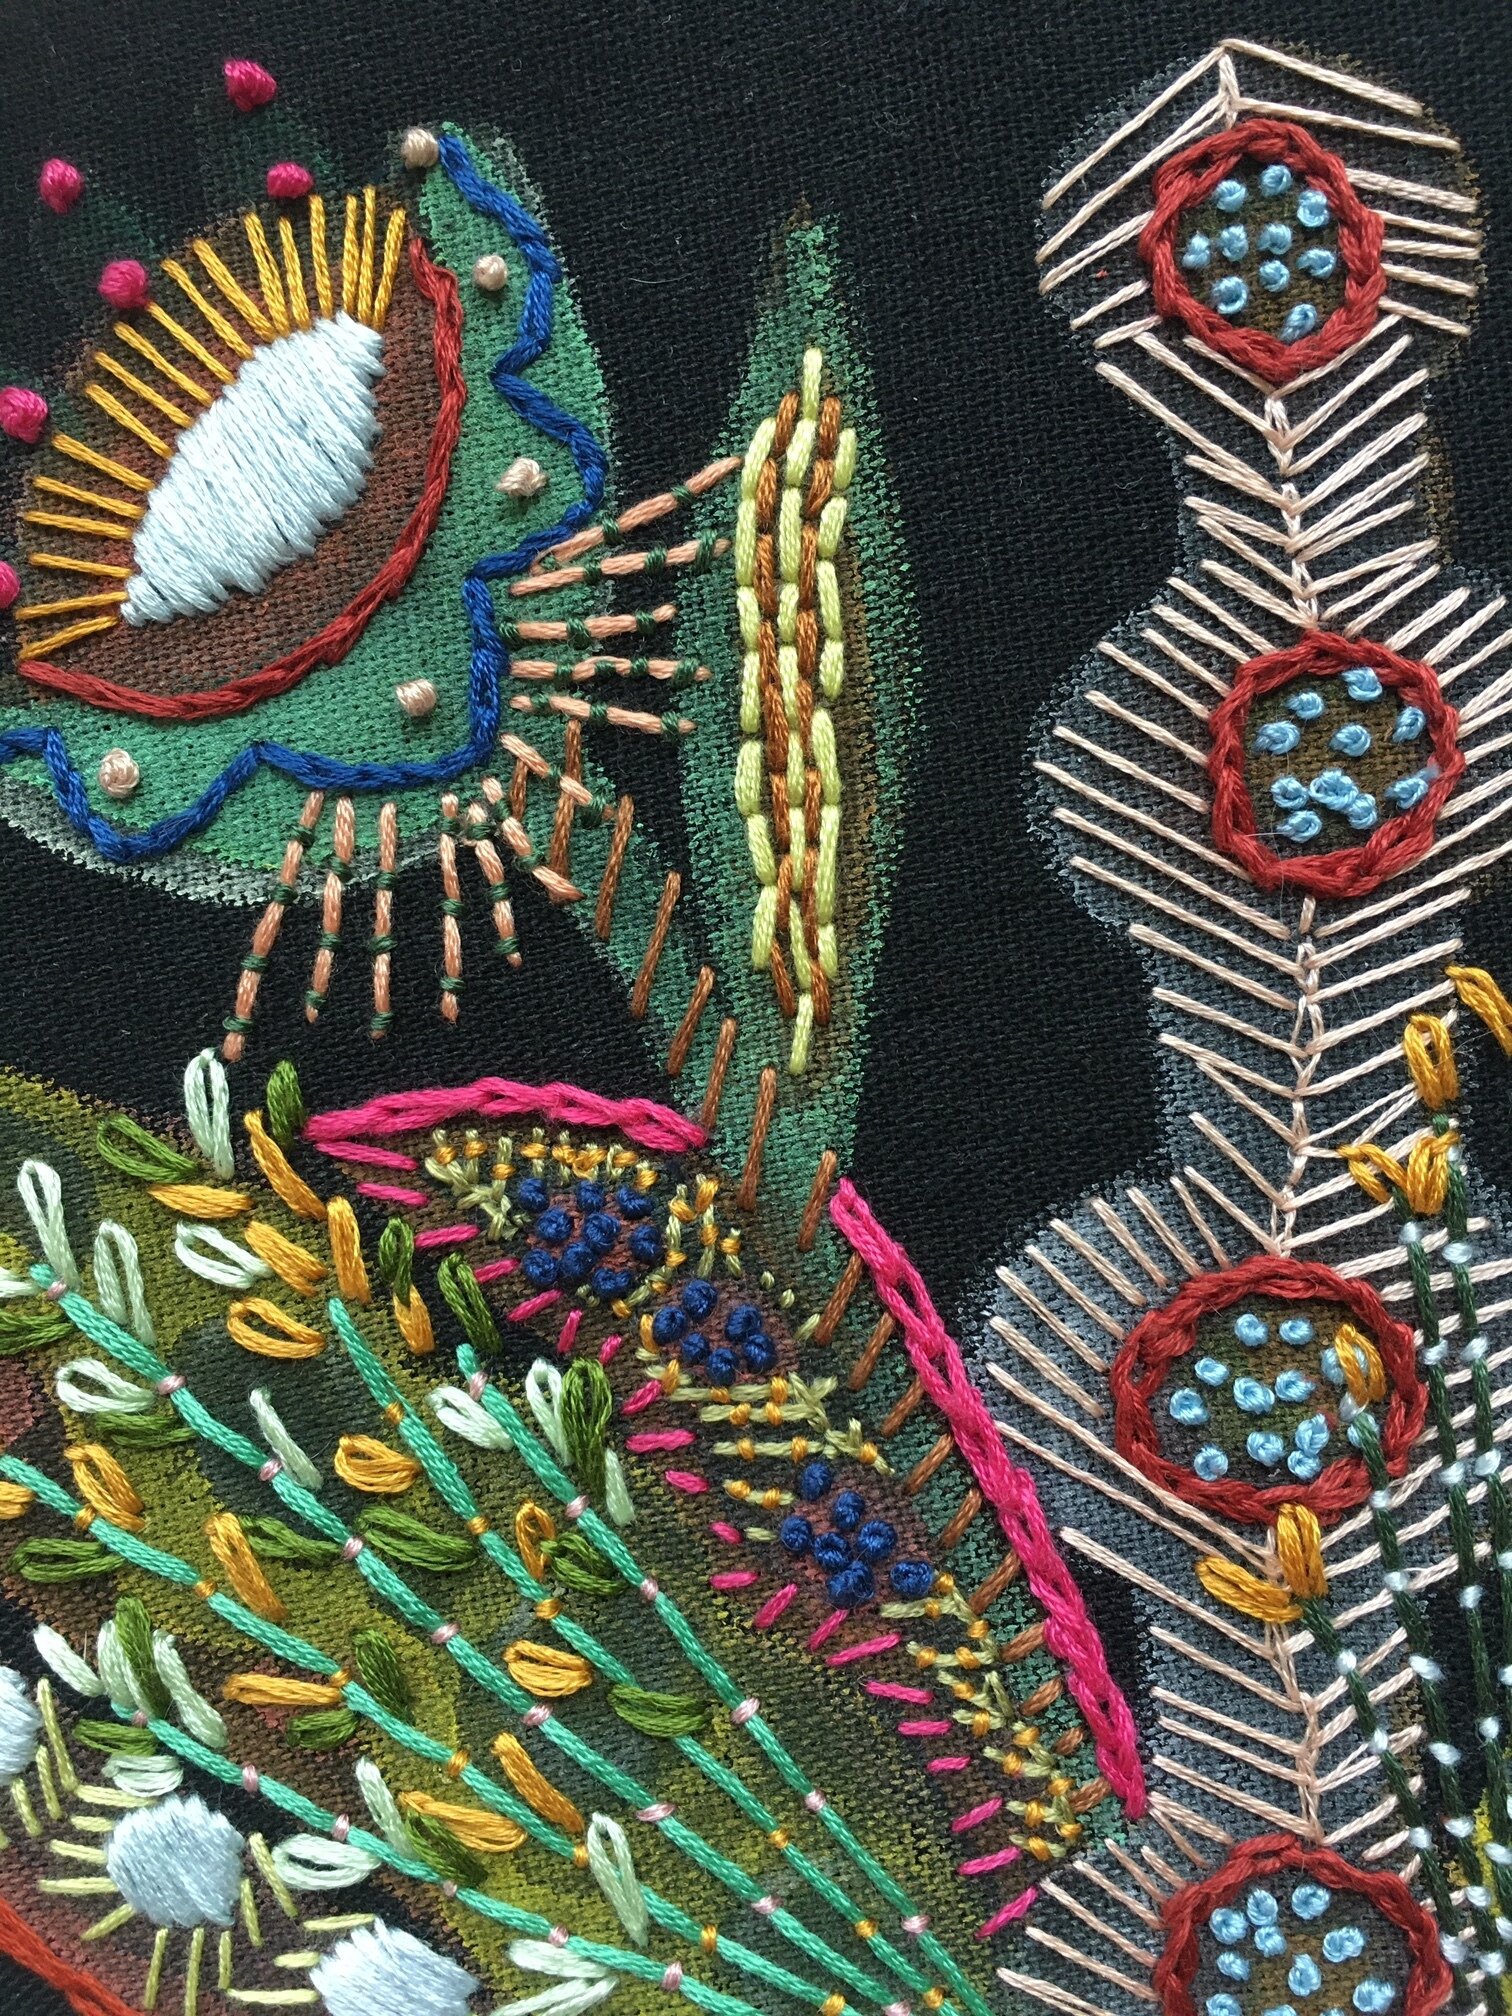 night embroidery close up.JPG